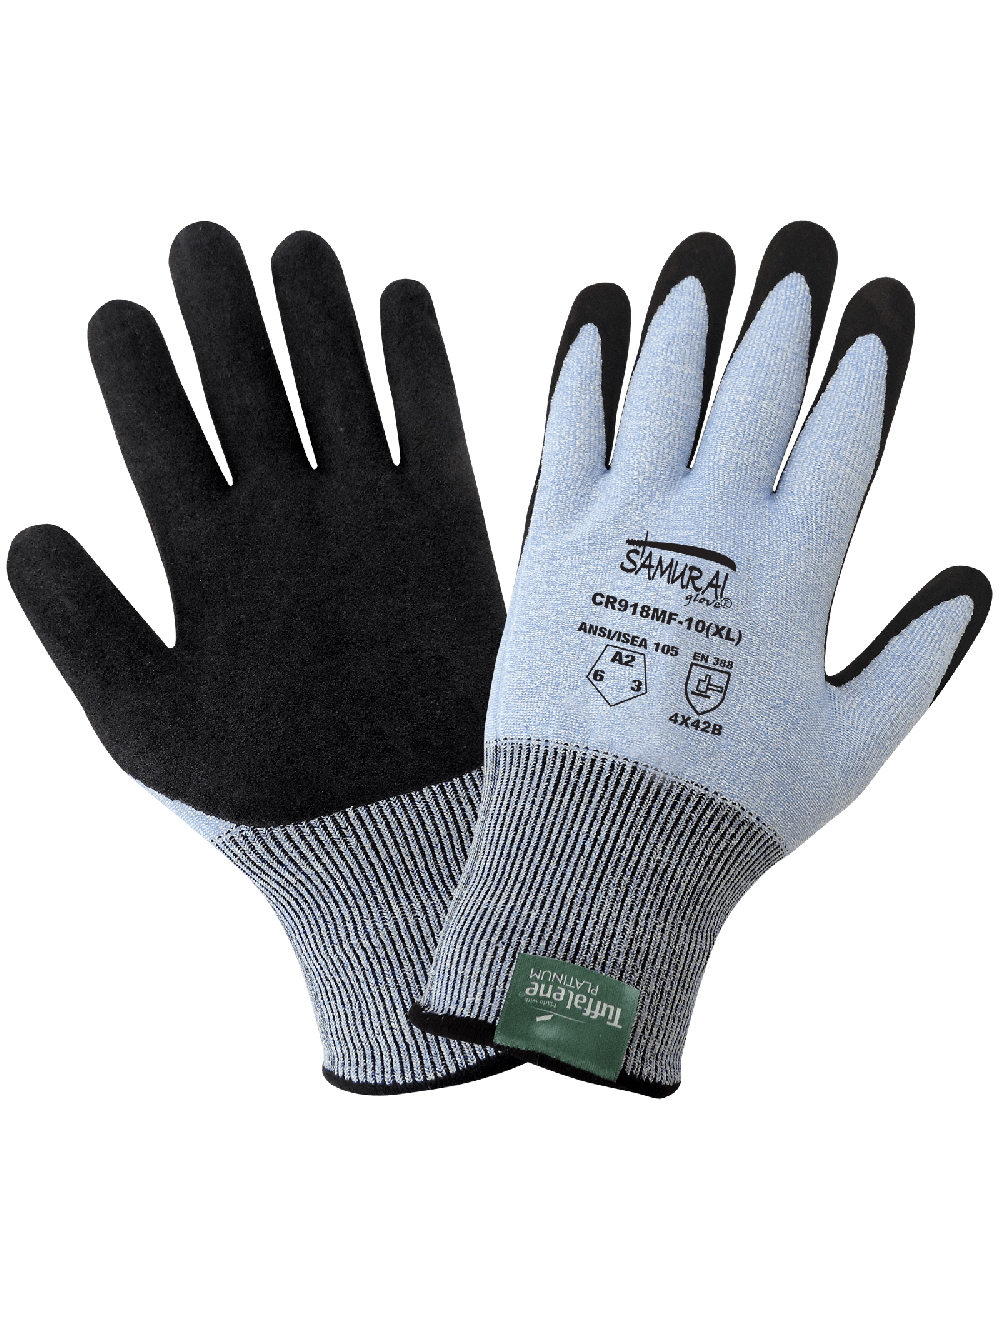 Samurai Glove® Lightweight Cut Resistant Gloves Made With Tuffalene® Platinum - CR918MF